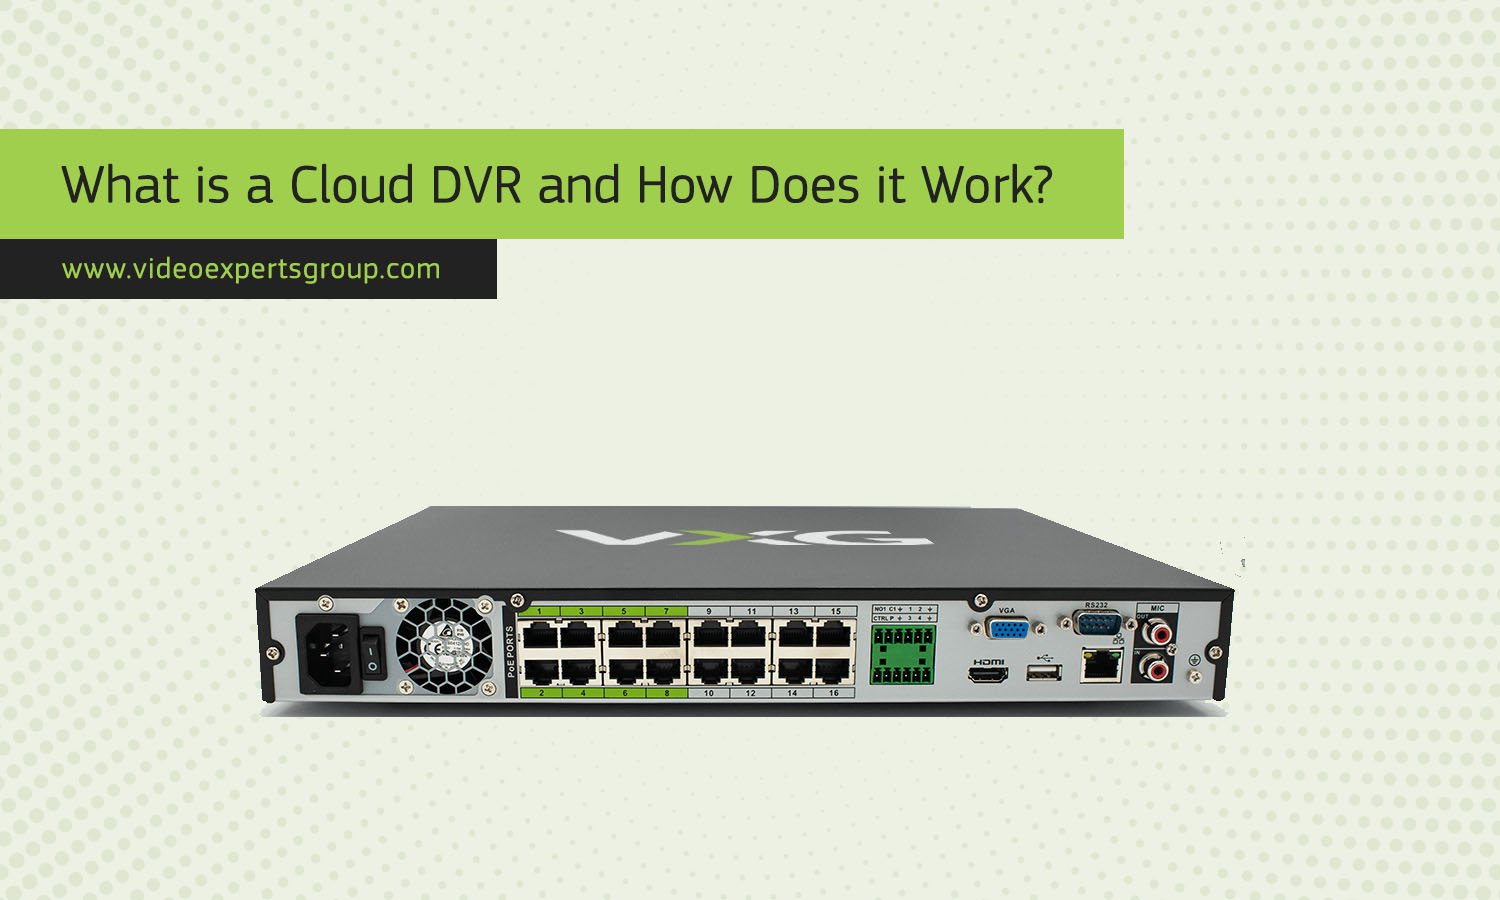 What is a Cloud DVR?